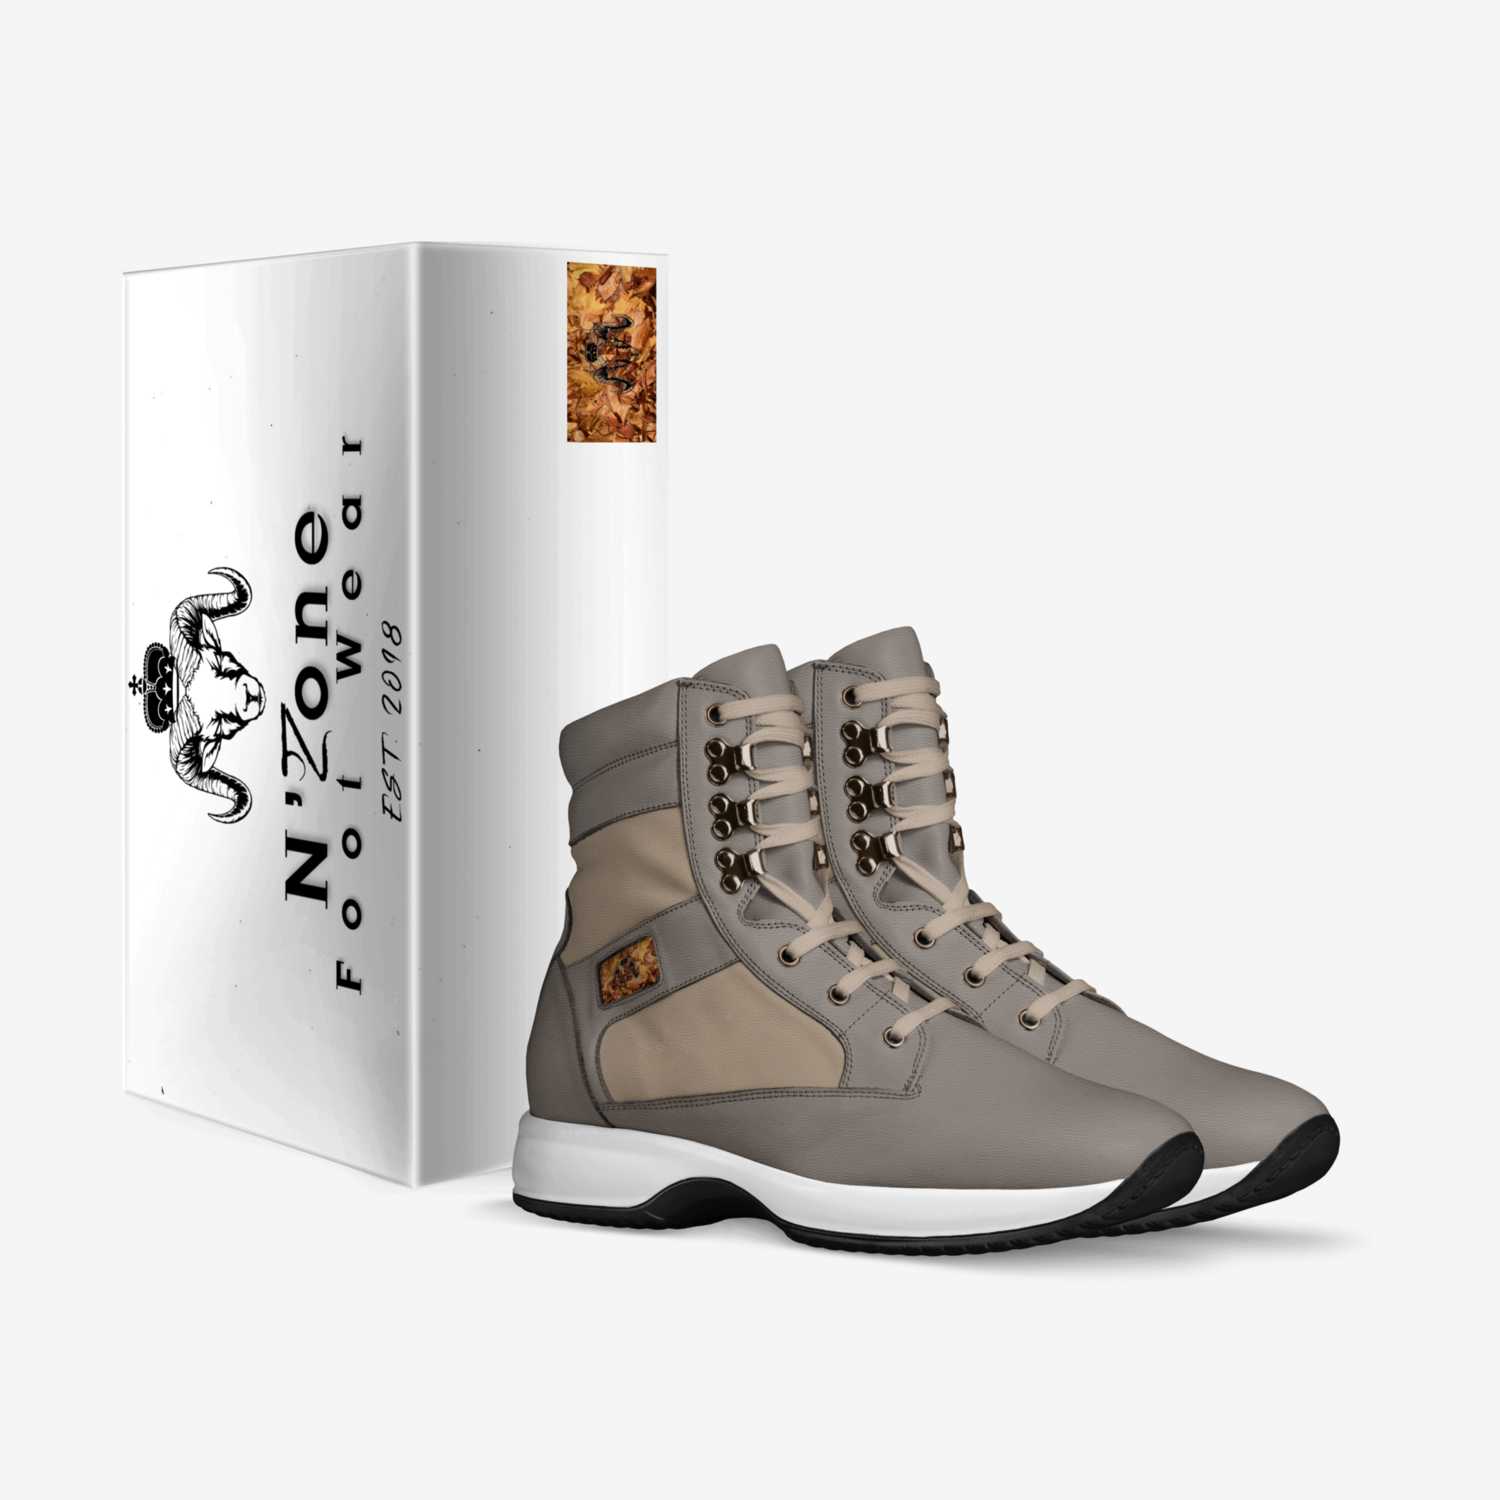 N'Zone FootWear custom made in Italy shoes by Narada vanegas | Box view